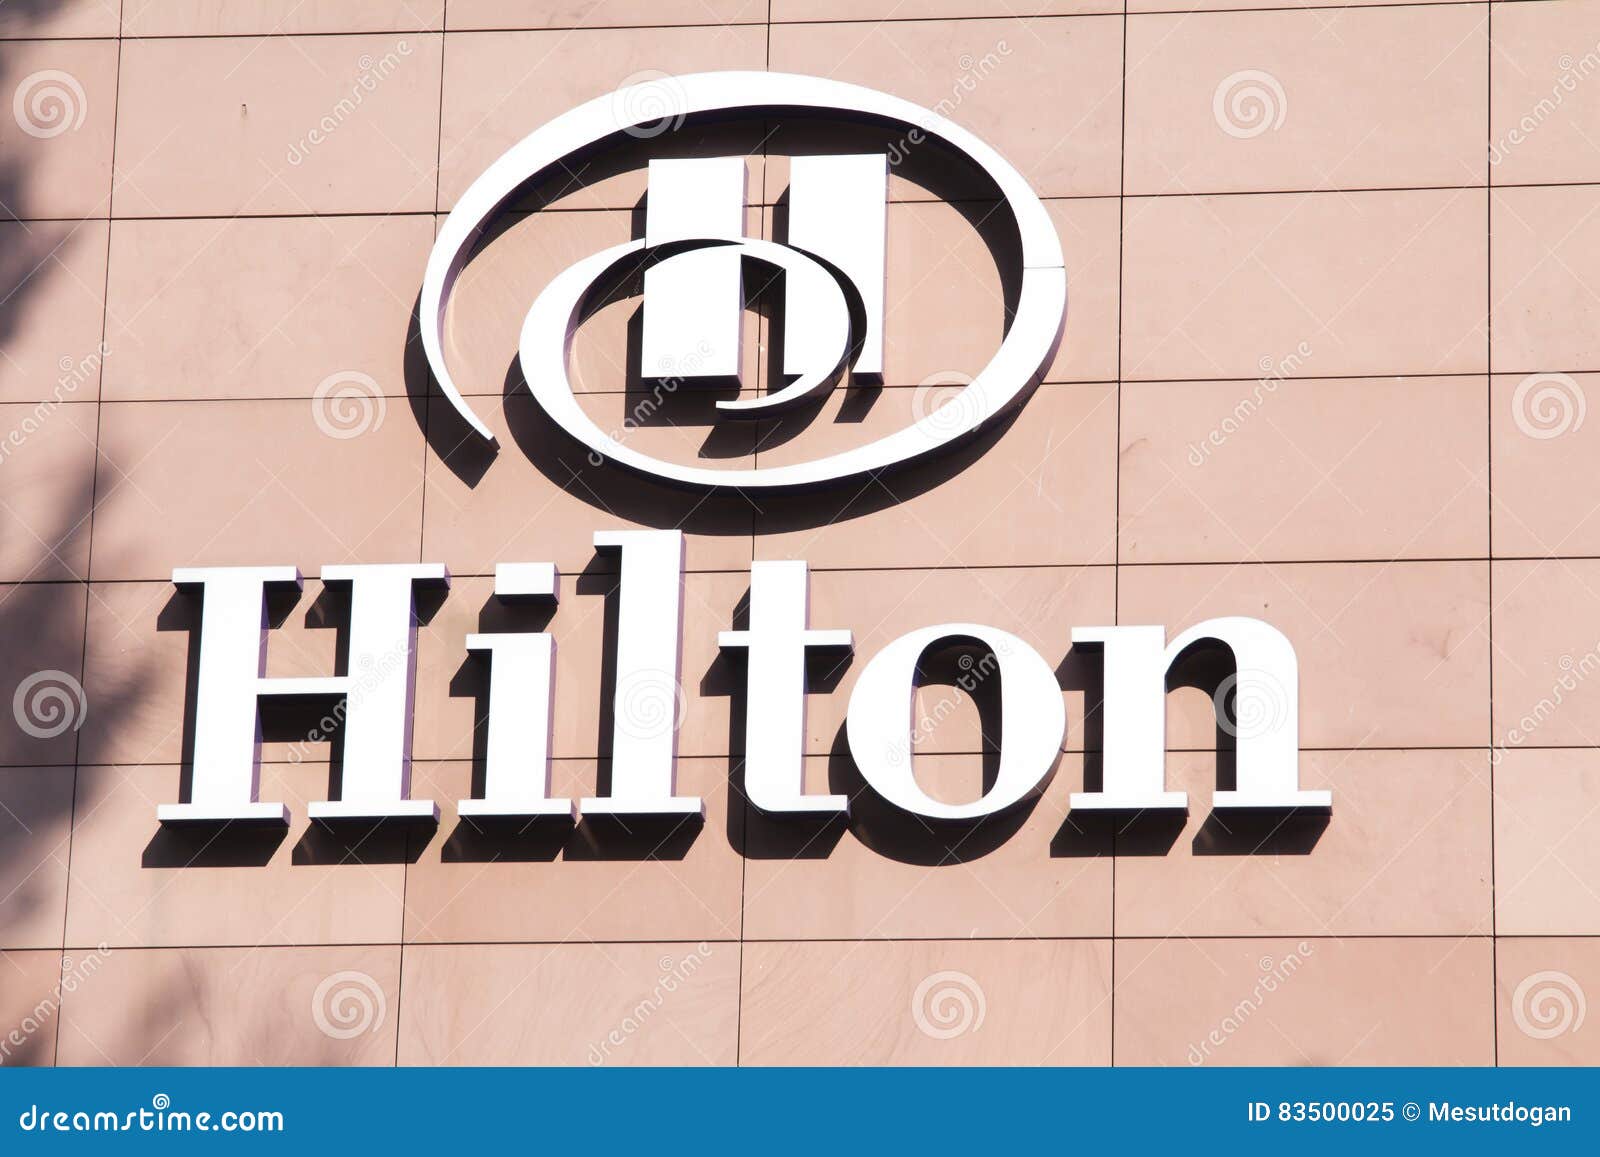 Hilton editorial image. Image of hilton, logo, rest, international